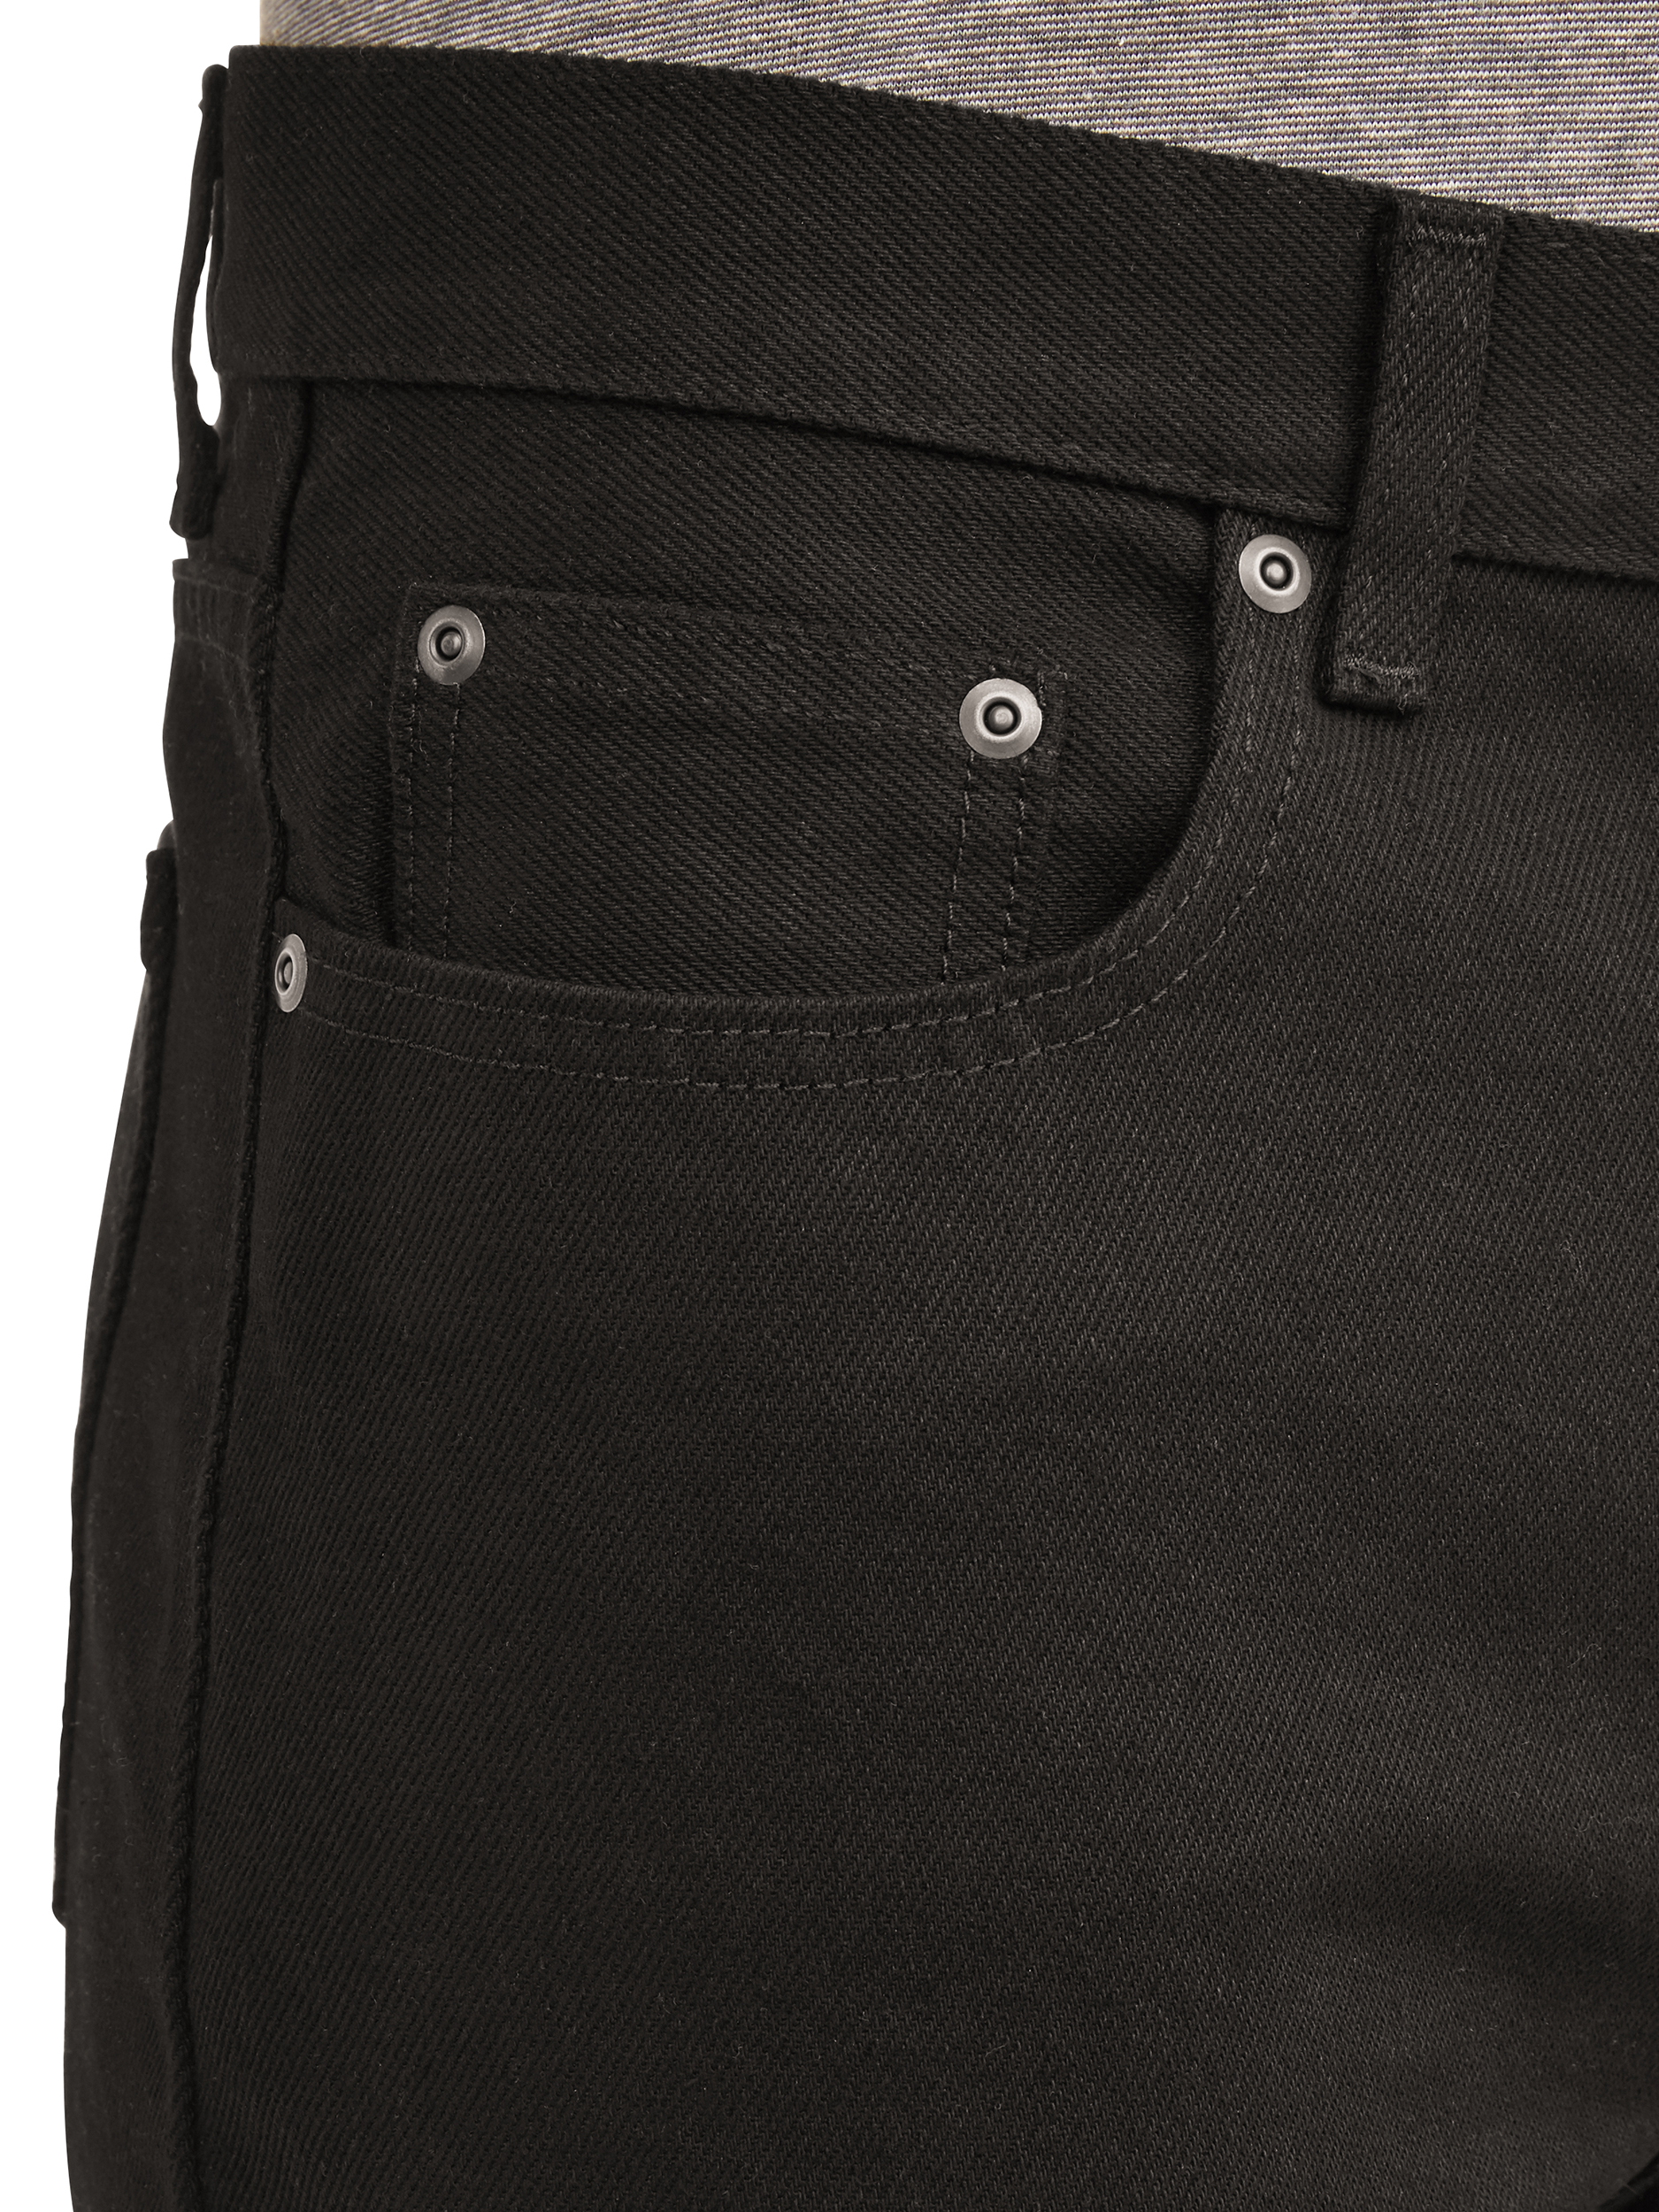 George Men's and Big Men's 100% Cotton Regular Fit Jeans - image 8 of 9